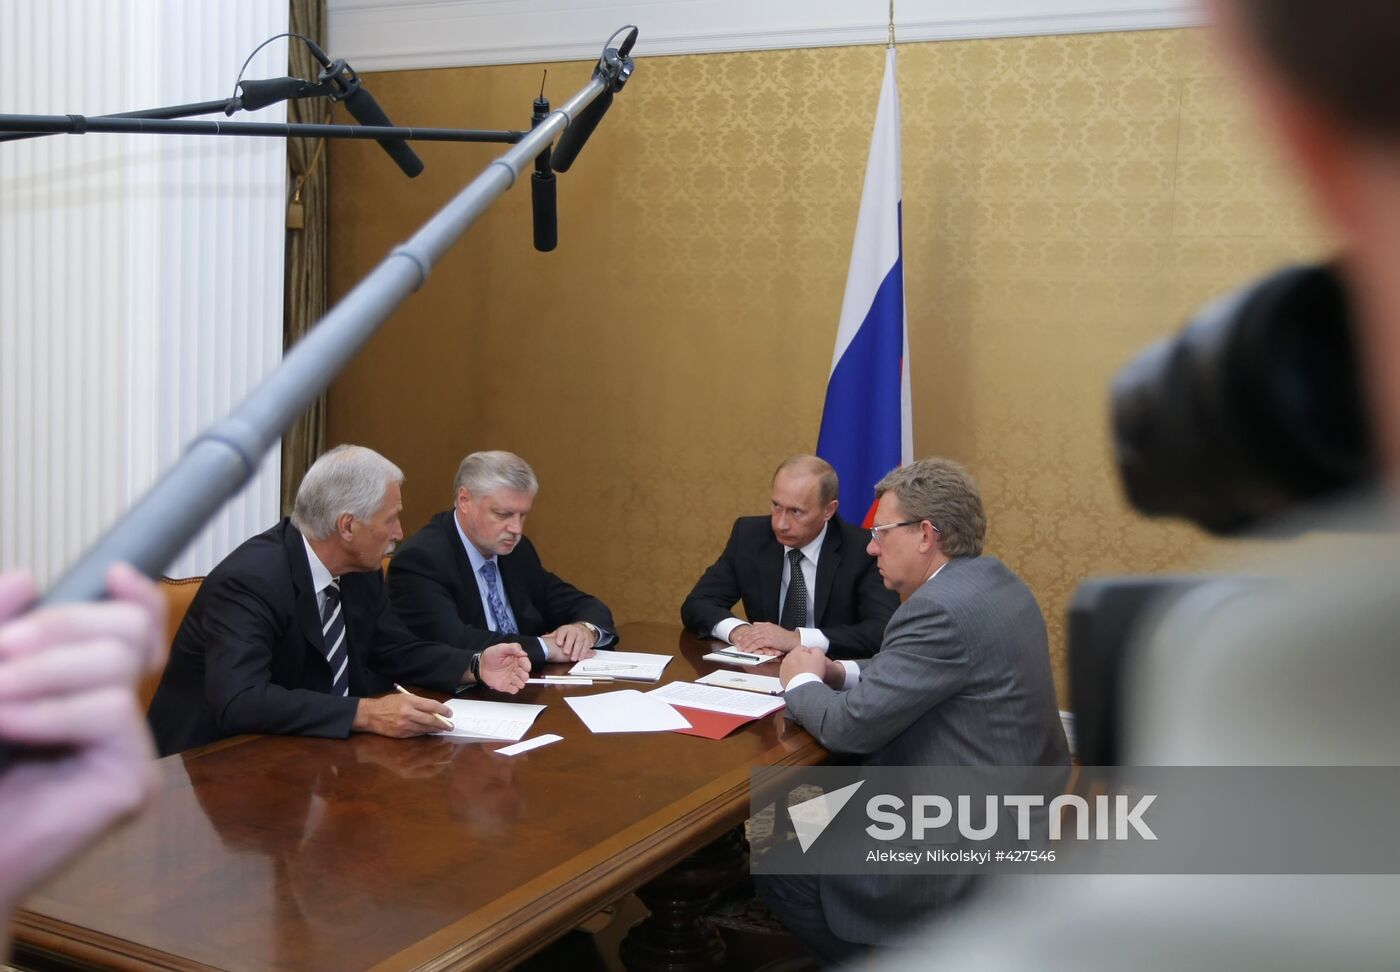 Putin's meeting with Gryzlov, Mironov, and Kudrin